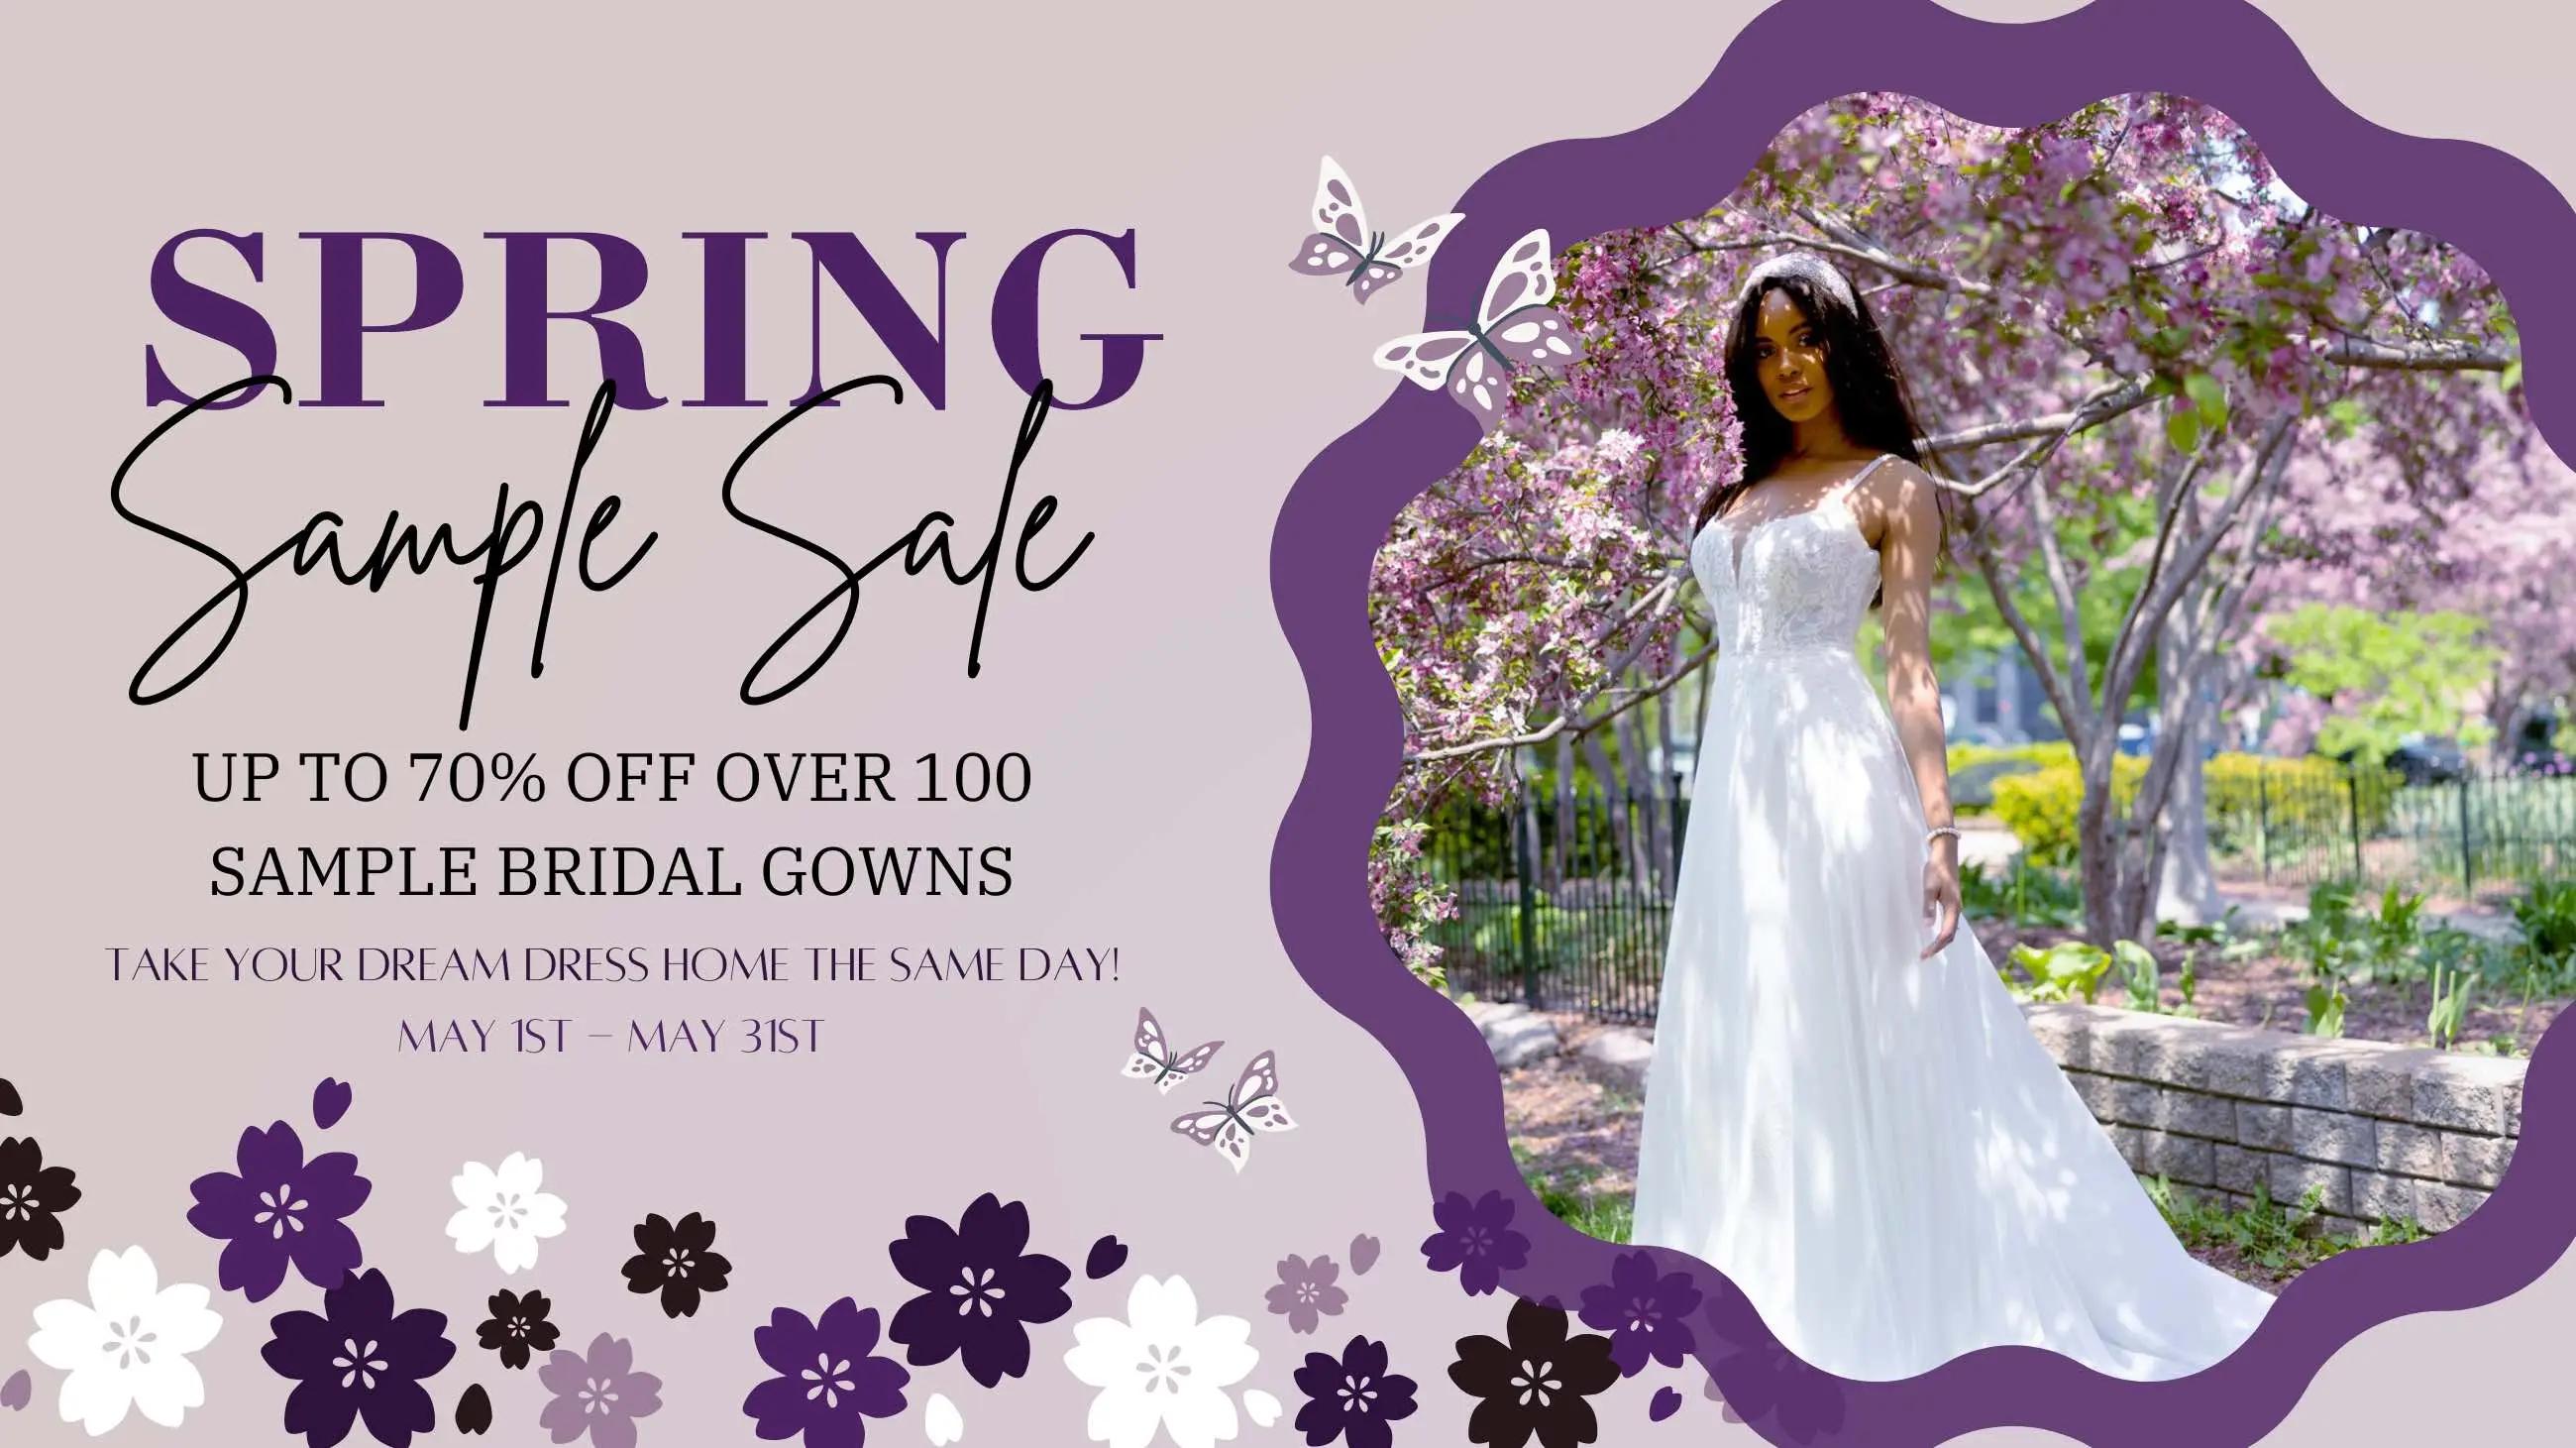 Spring Sample Sale during May at Wendy's Bridal